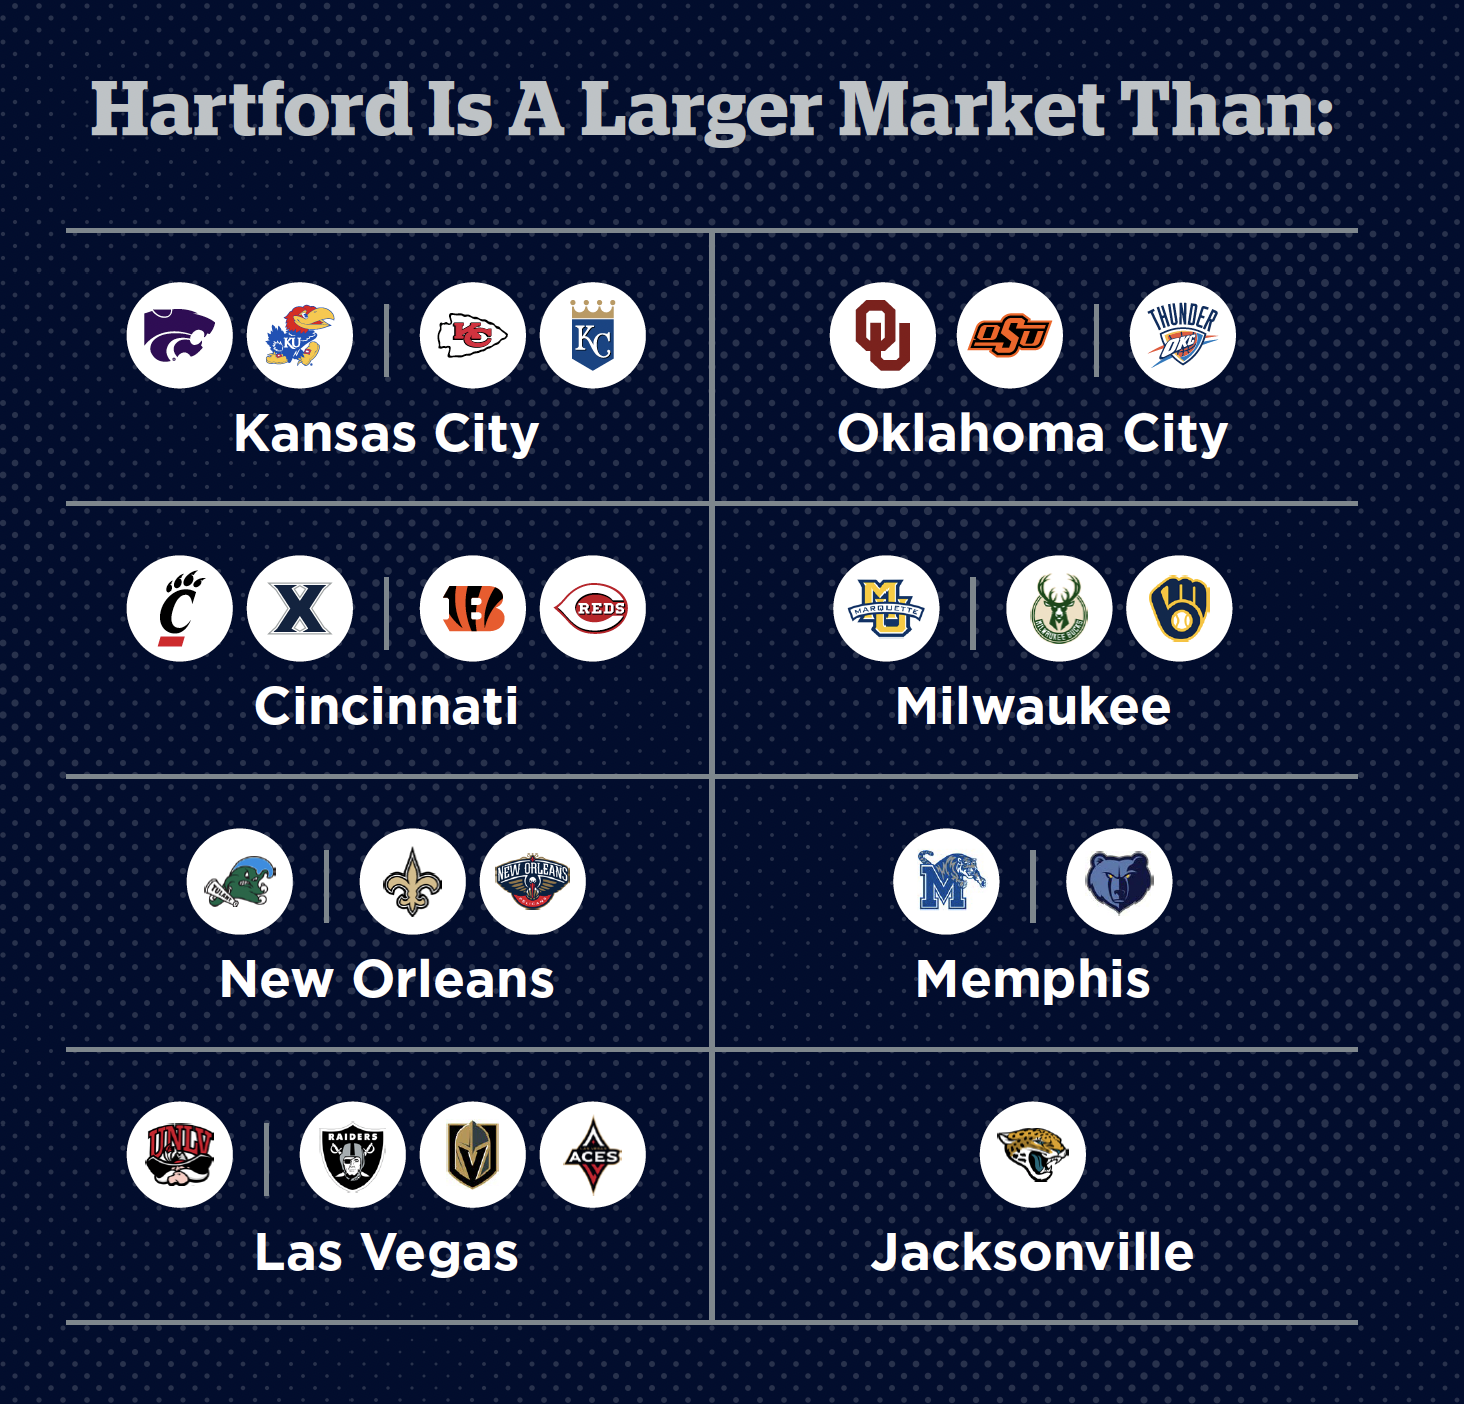 infogrpah showing Hartford is a larger market than Kansas City, Oklahoma City, Cincinnati, Milwaukee, New Orleans, Memphis, Las Vegas, and Jacksonville